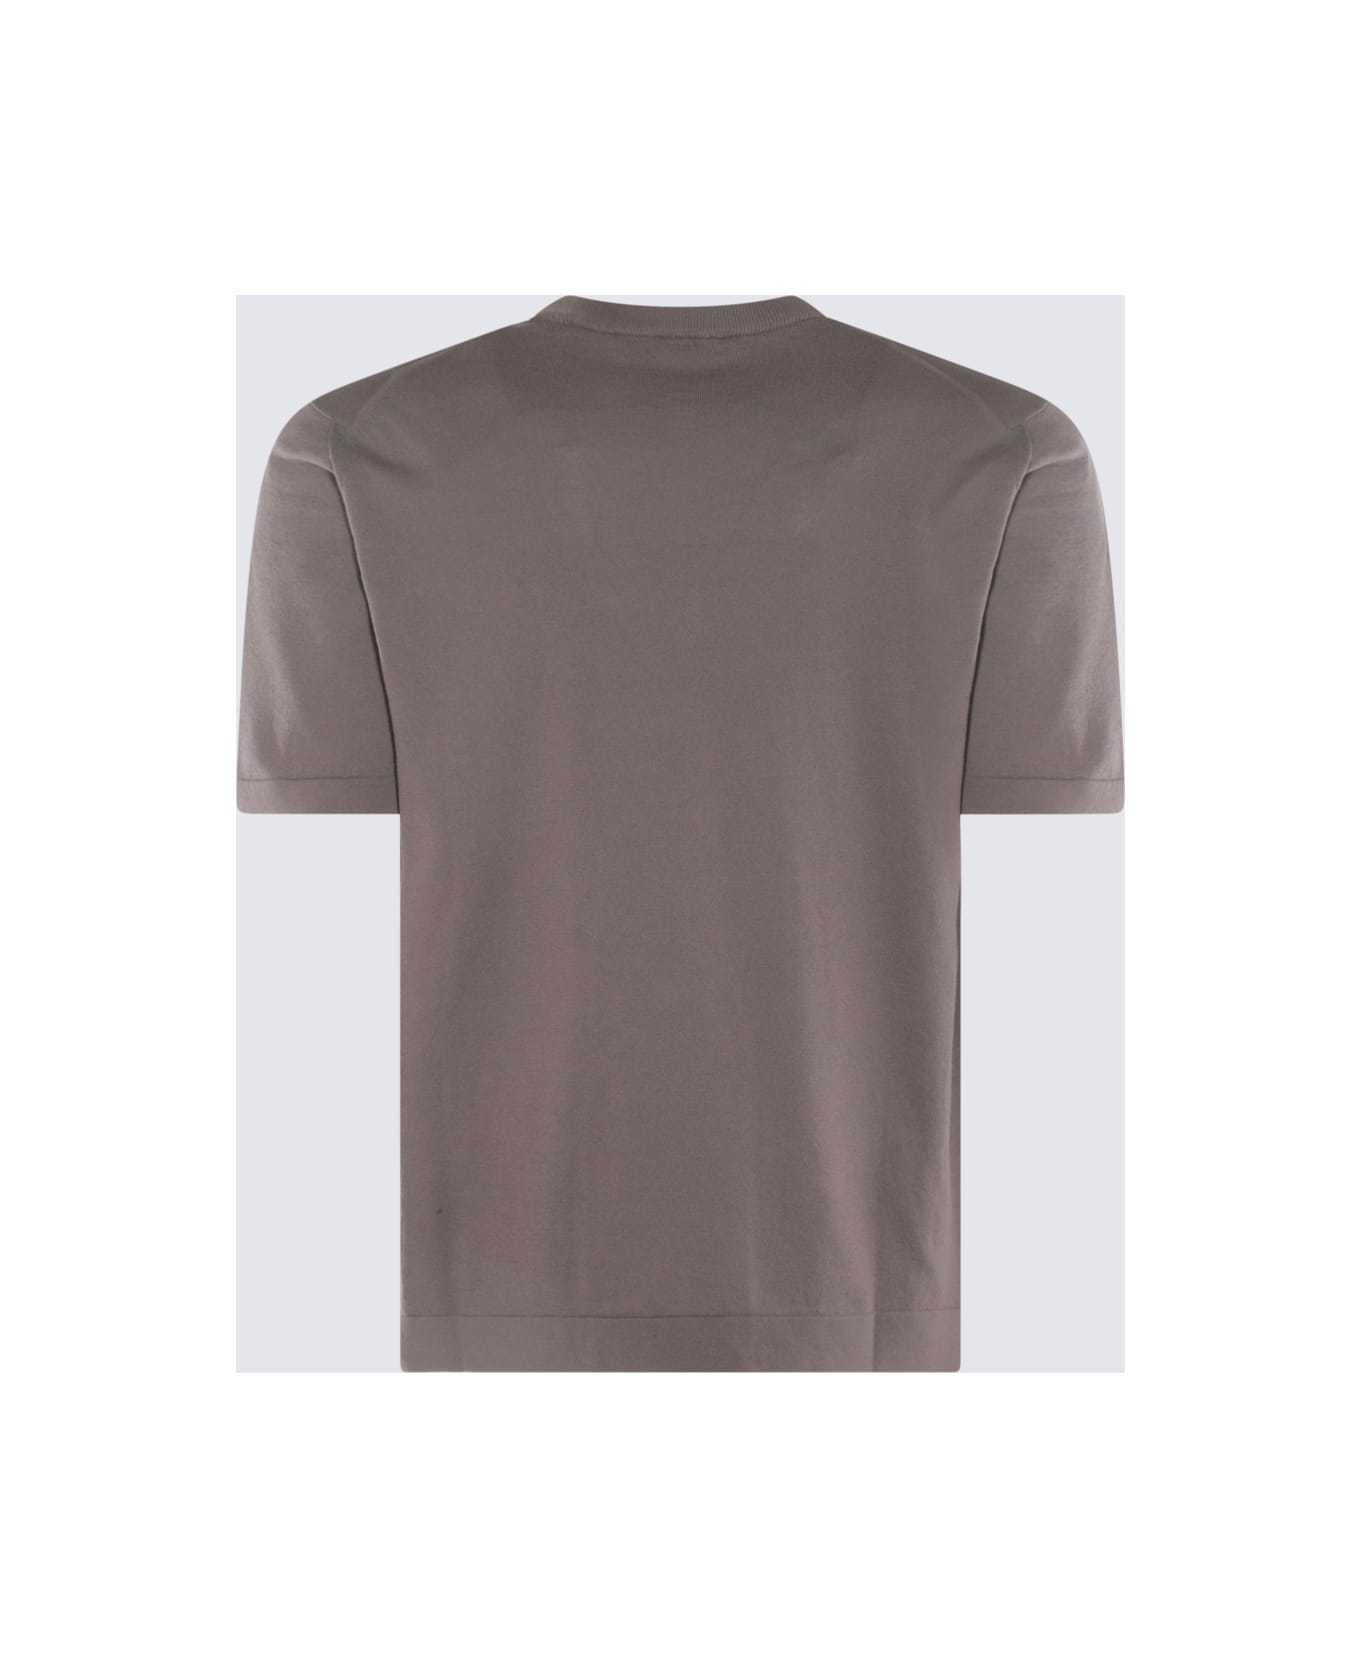 Piacenza Cashmere Stone Grey Cotton T-shirt - Stone シャツ